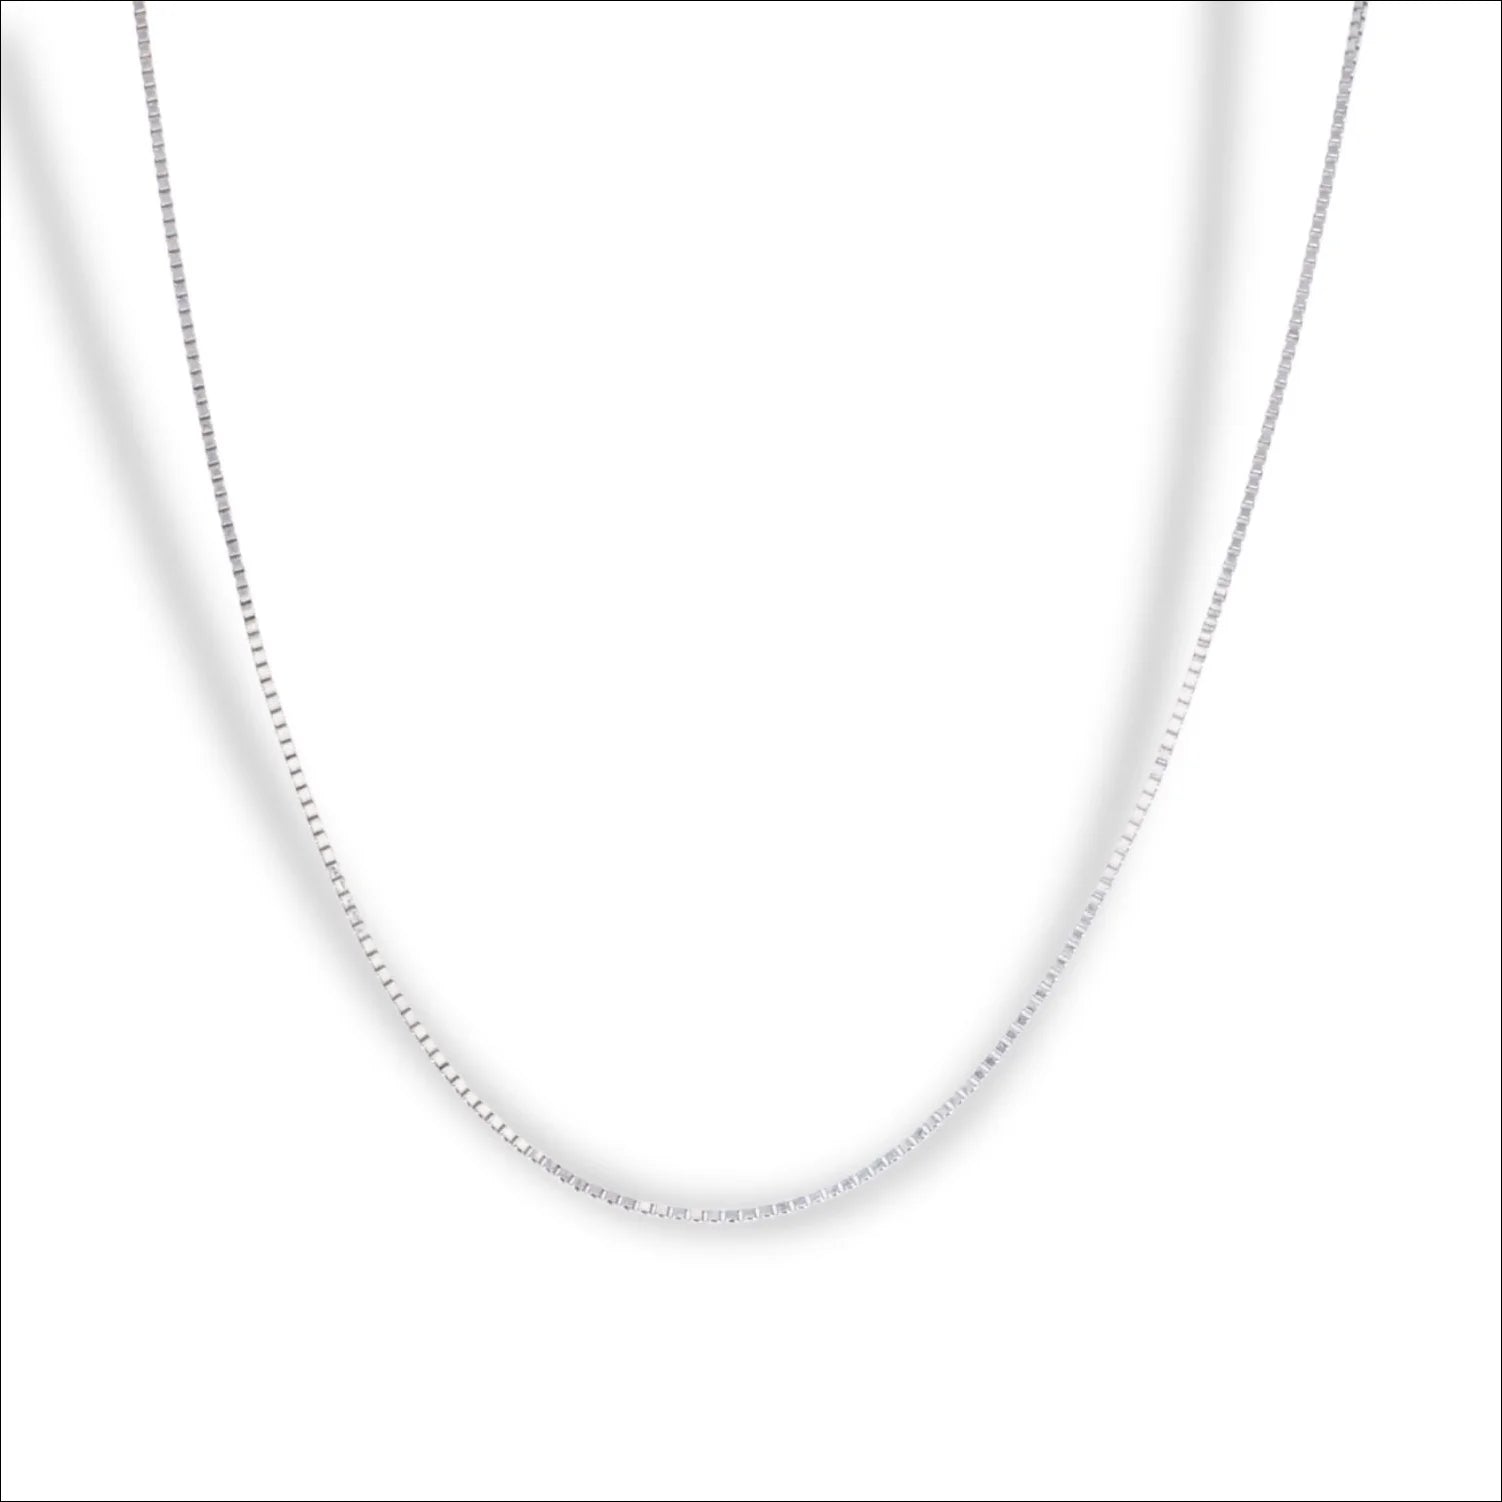 Delicate 18k white gold box chain - petite elegance | Chains